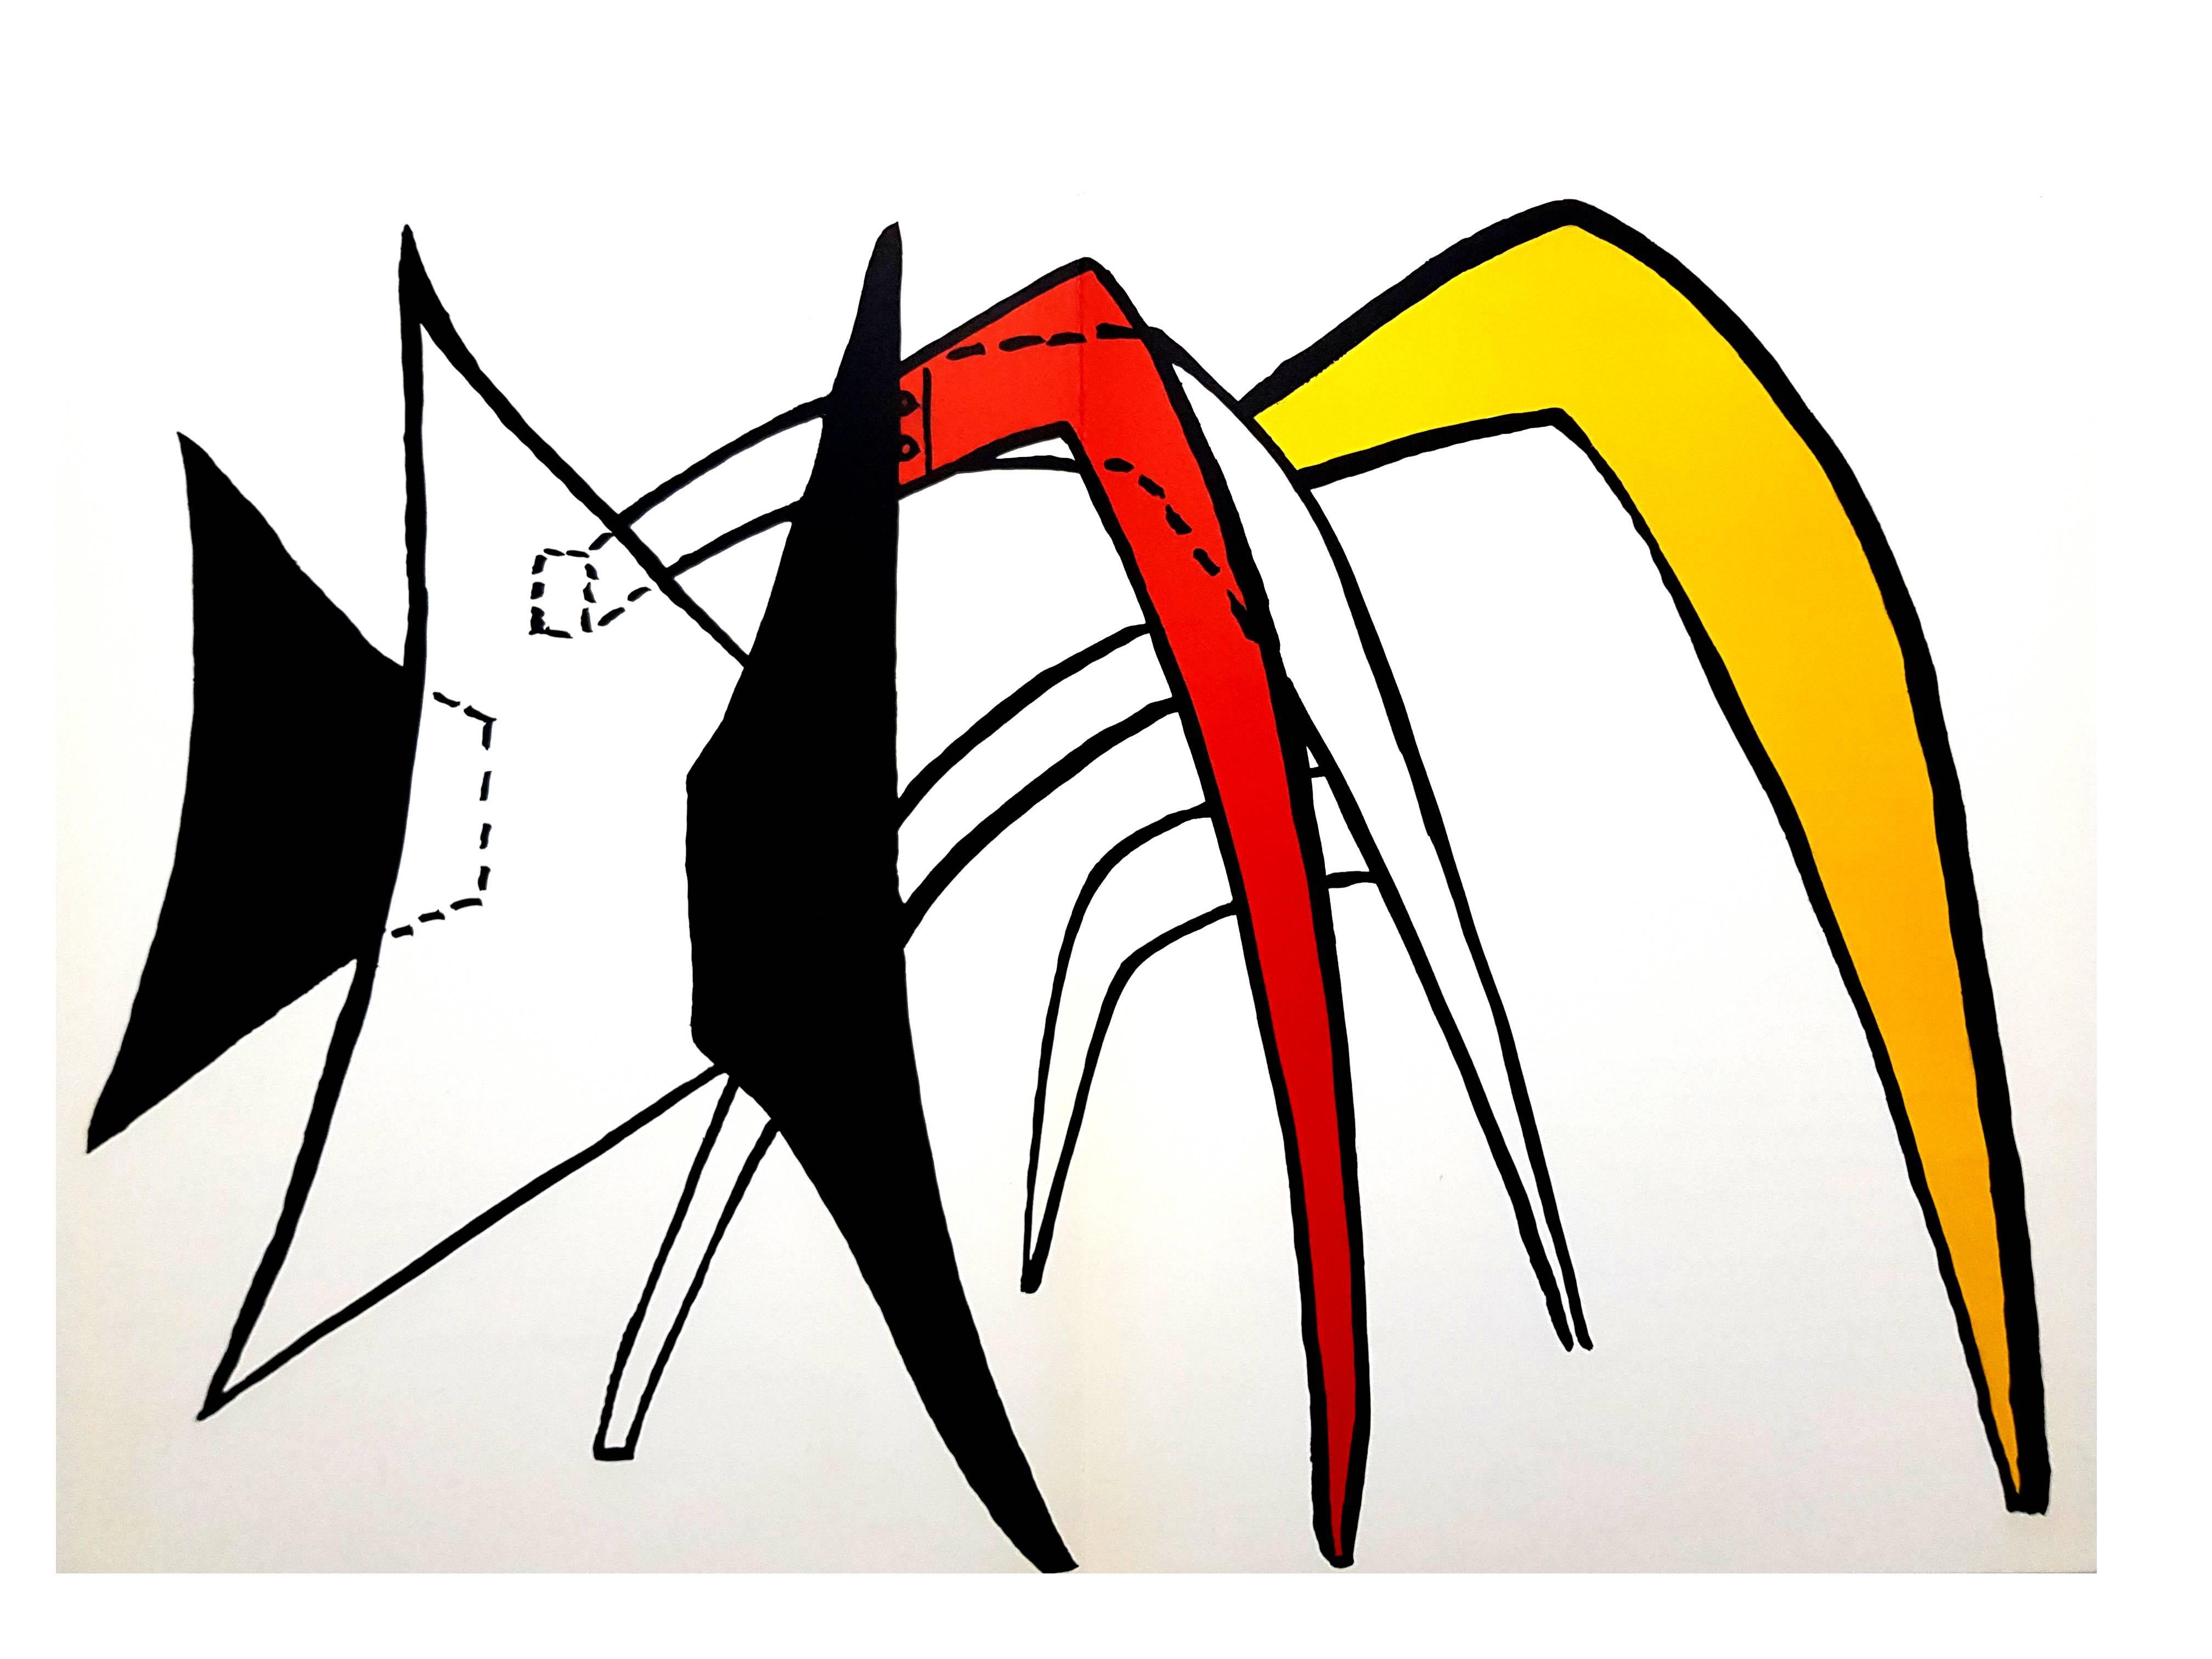 Alexander Calder - Original Lithograph -  from "Derriere le Miroir"Behind the Mirror
1976 
Framed
Dimensions: 38 x 56 cm
Source: Derrière le miroir (DLM), n°141, 1976

Alexander Calder (1898 - 1976)

The American artist Alexander Calder was born in